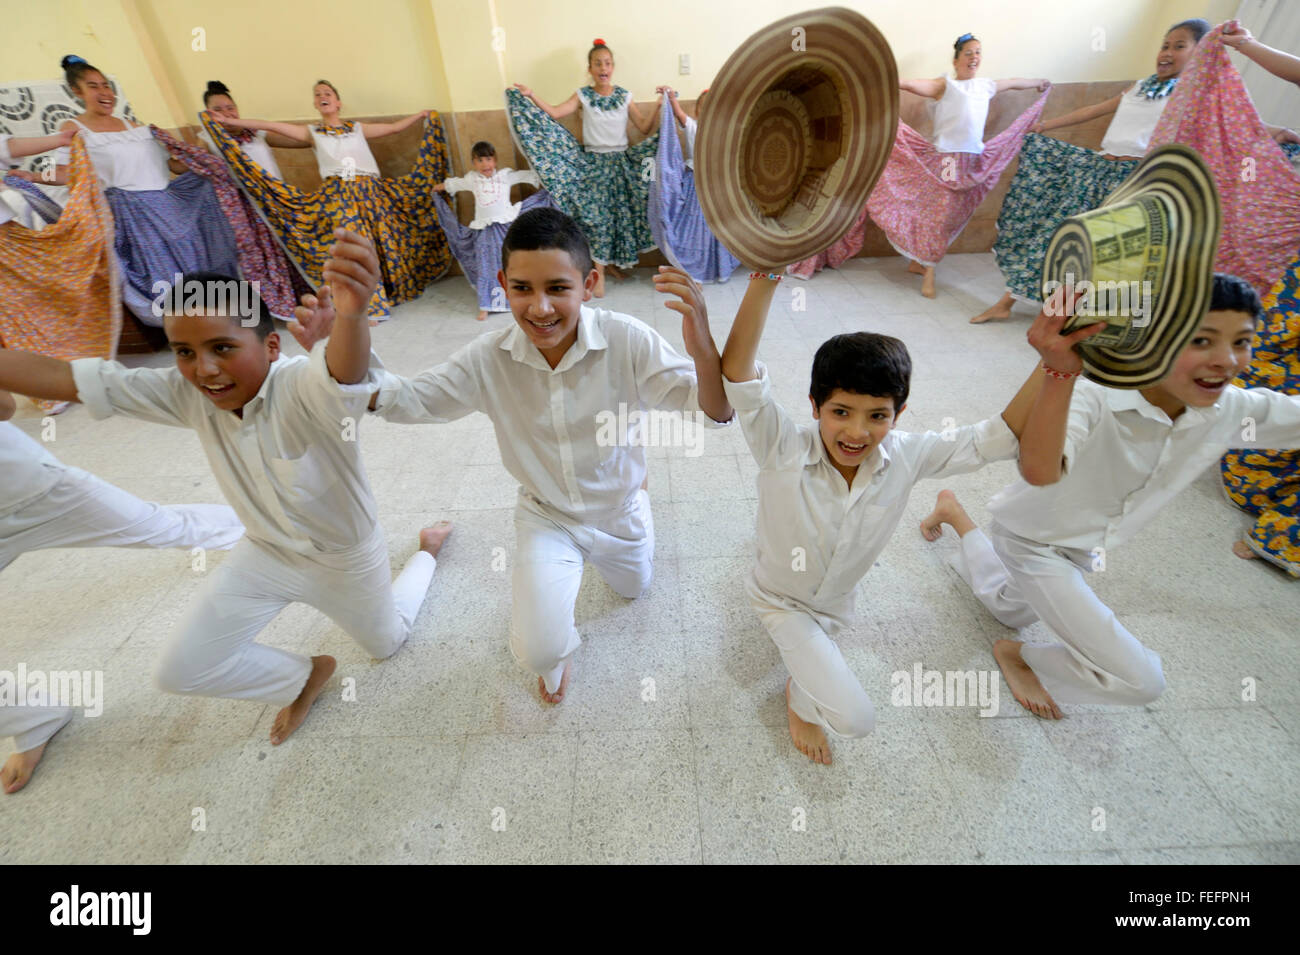 Boys taking bow with straw hats, dance group, folk dance, traditional dance, Barrio San Martín, Bogotá, Colombia Stock Photo